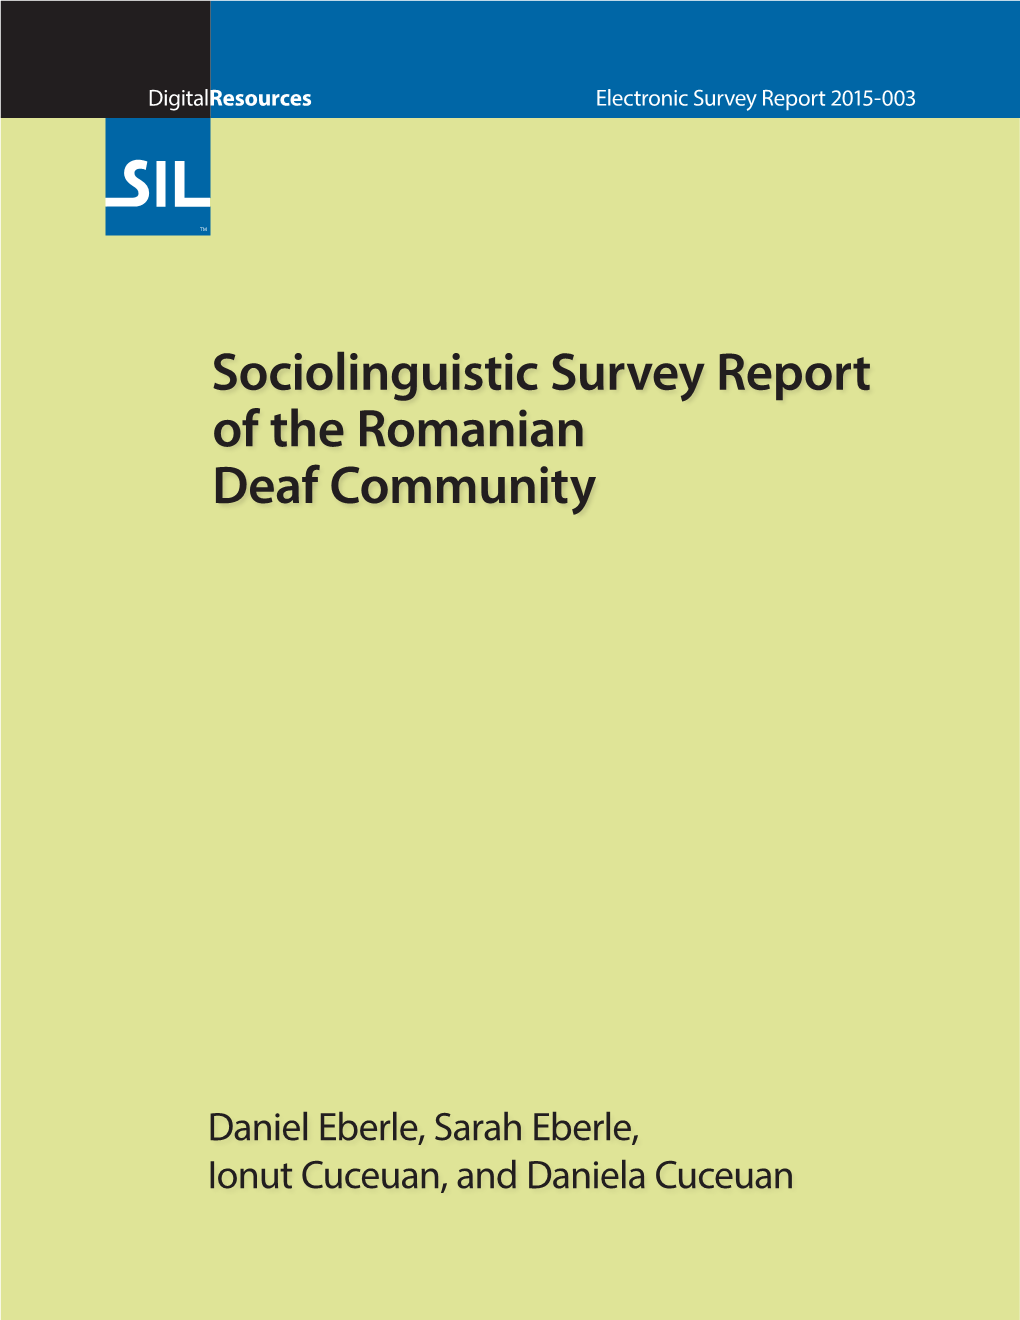 Sociolinguistic Survey Report of the Romanian Deaf Community